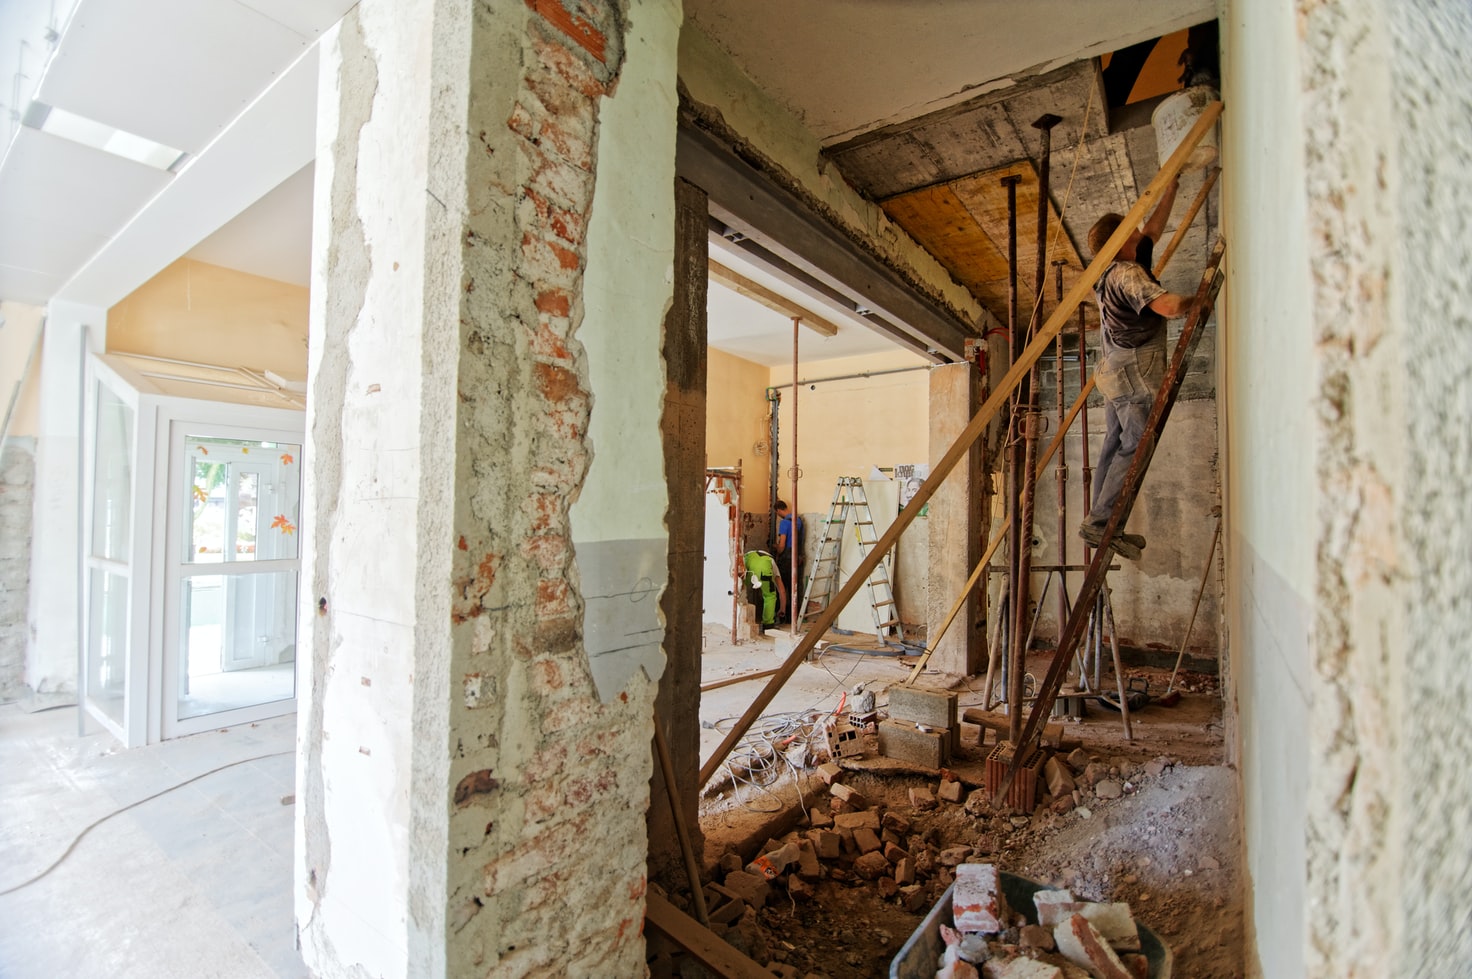 How Long Does A Whole Home Renovation Take